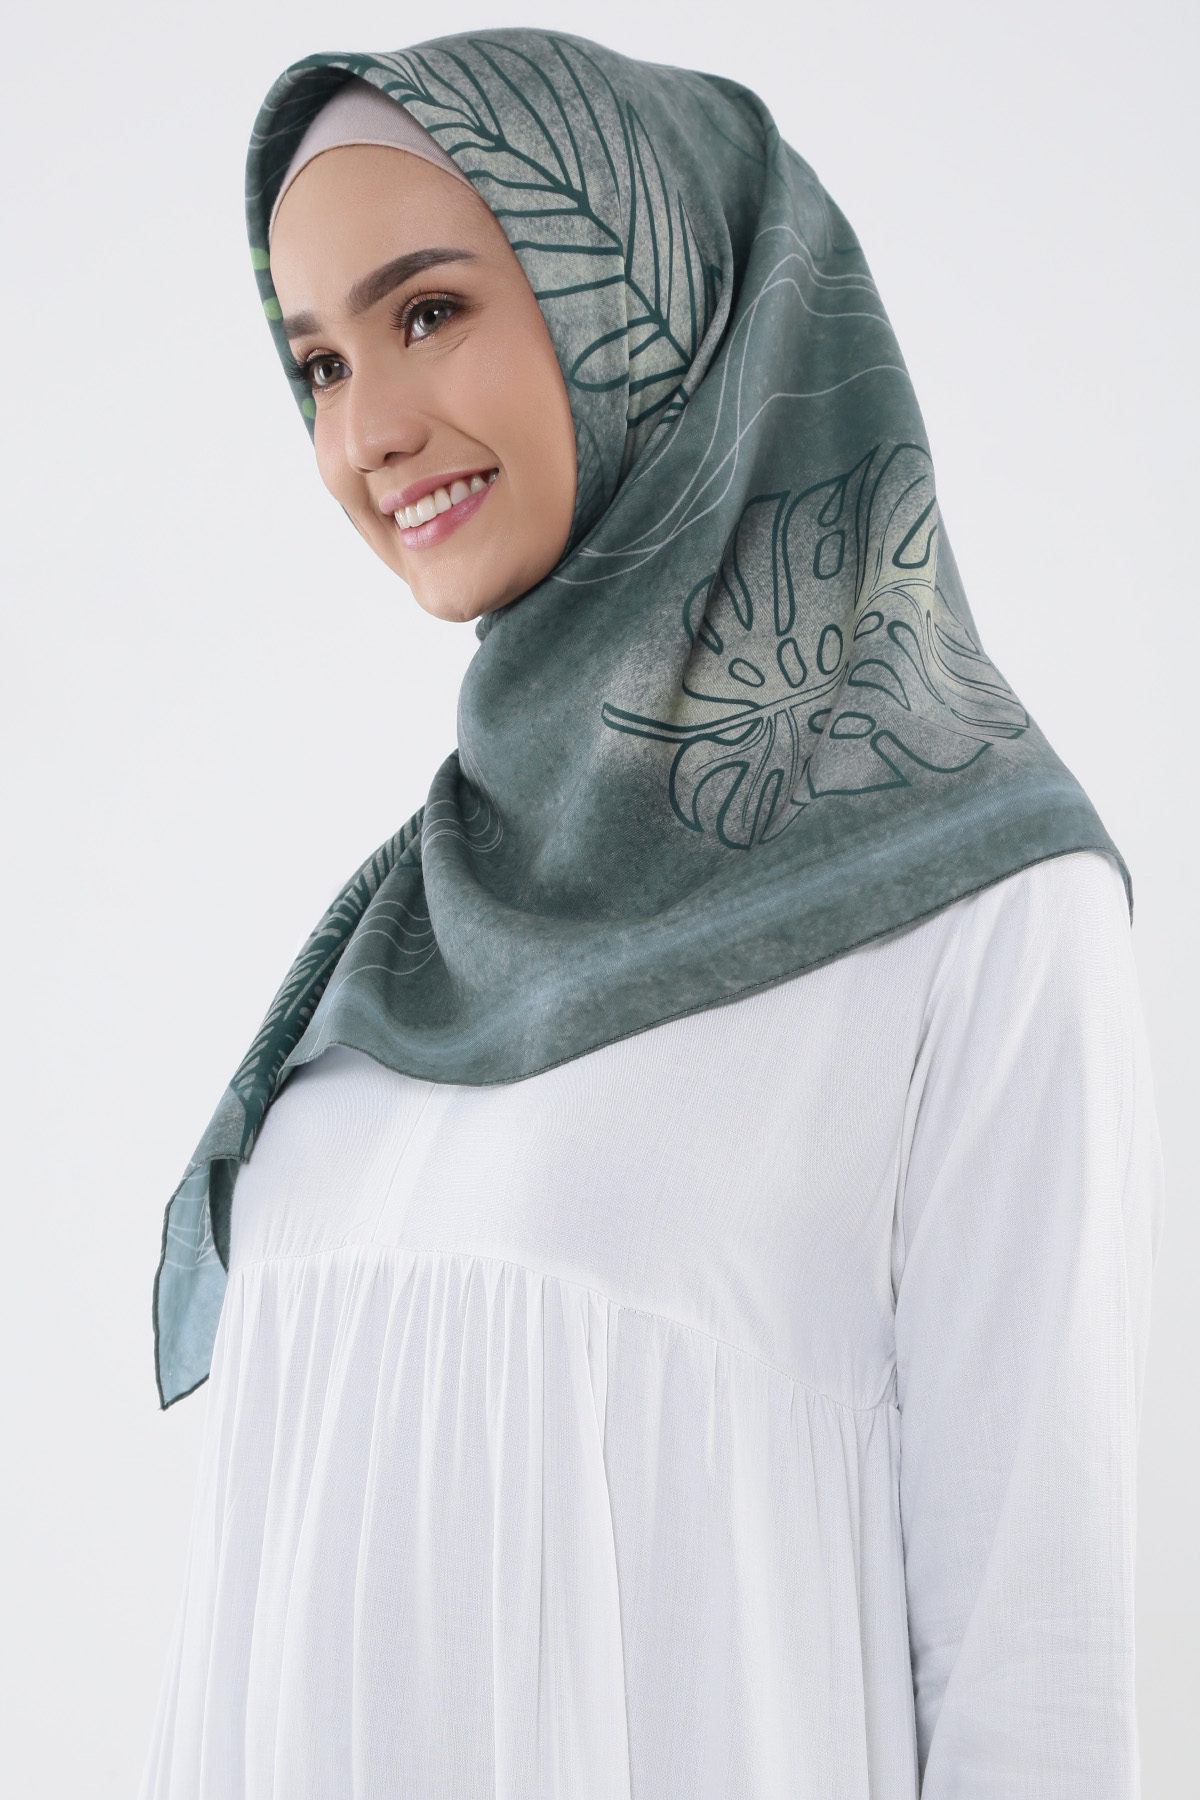 Jilbab Warna Putih Dan Baju Warna Apa